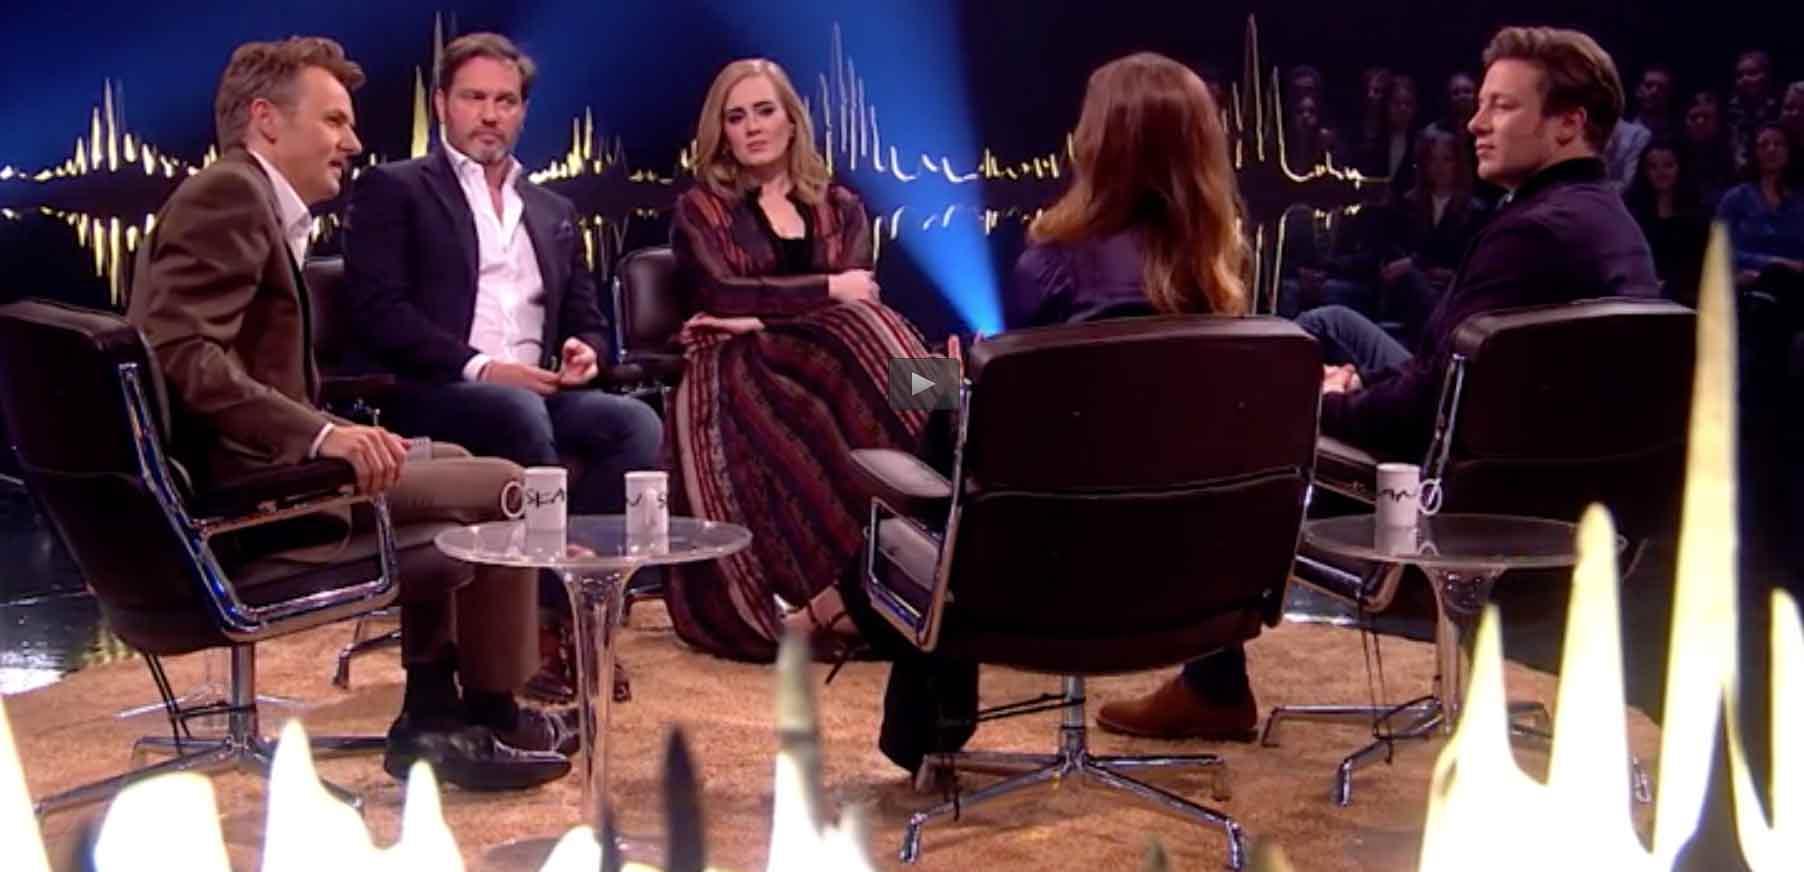 Fredrik Skavlan, Chris O'Neill, Adele, Madeleine och Jamie Oliver i SVT:s ”Skavlan”.